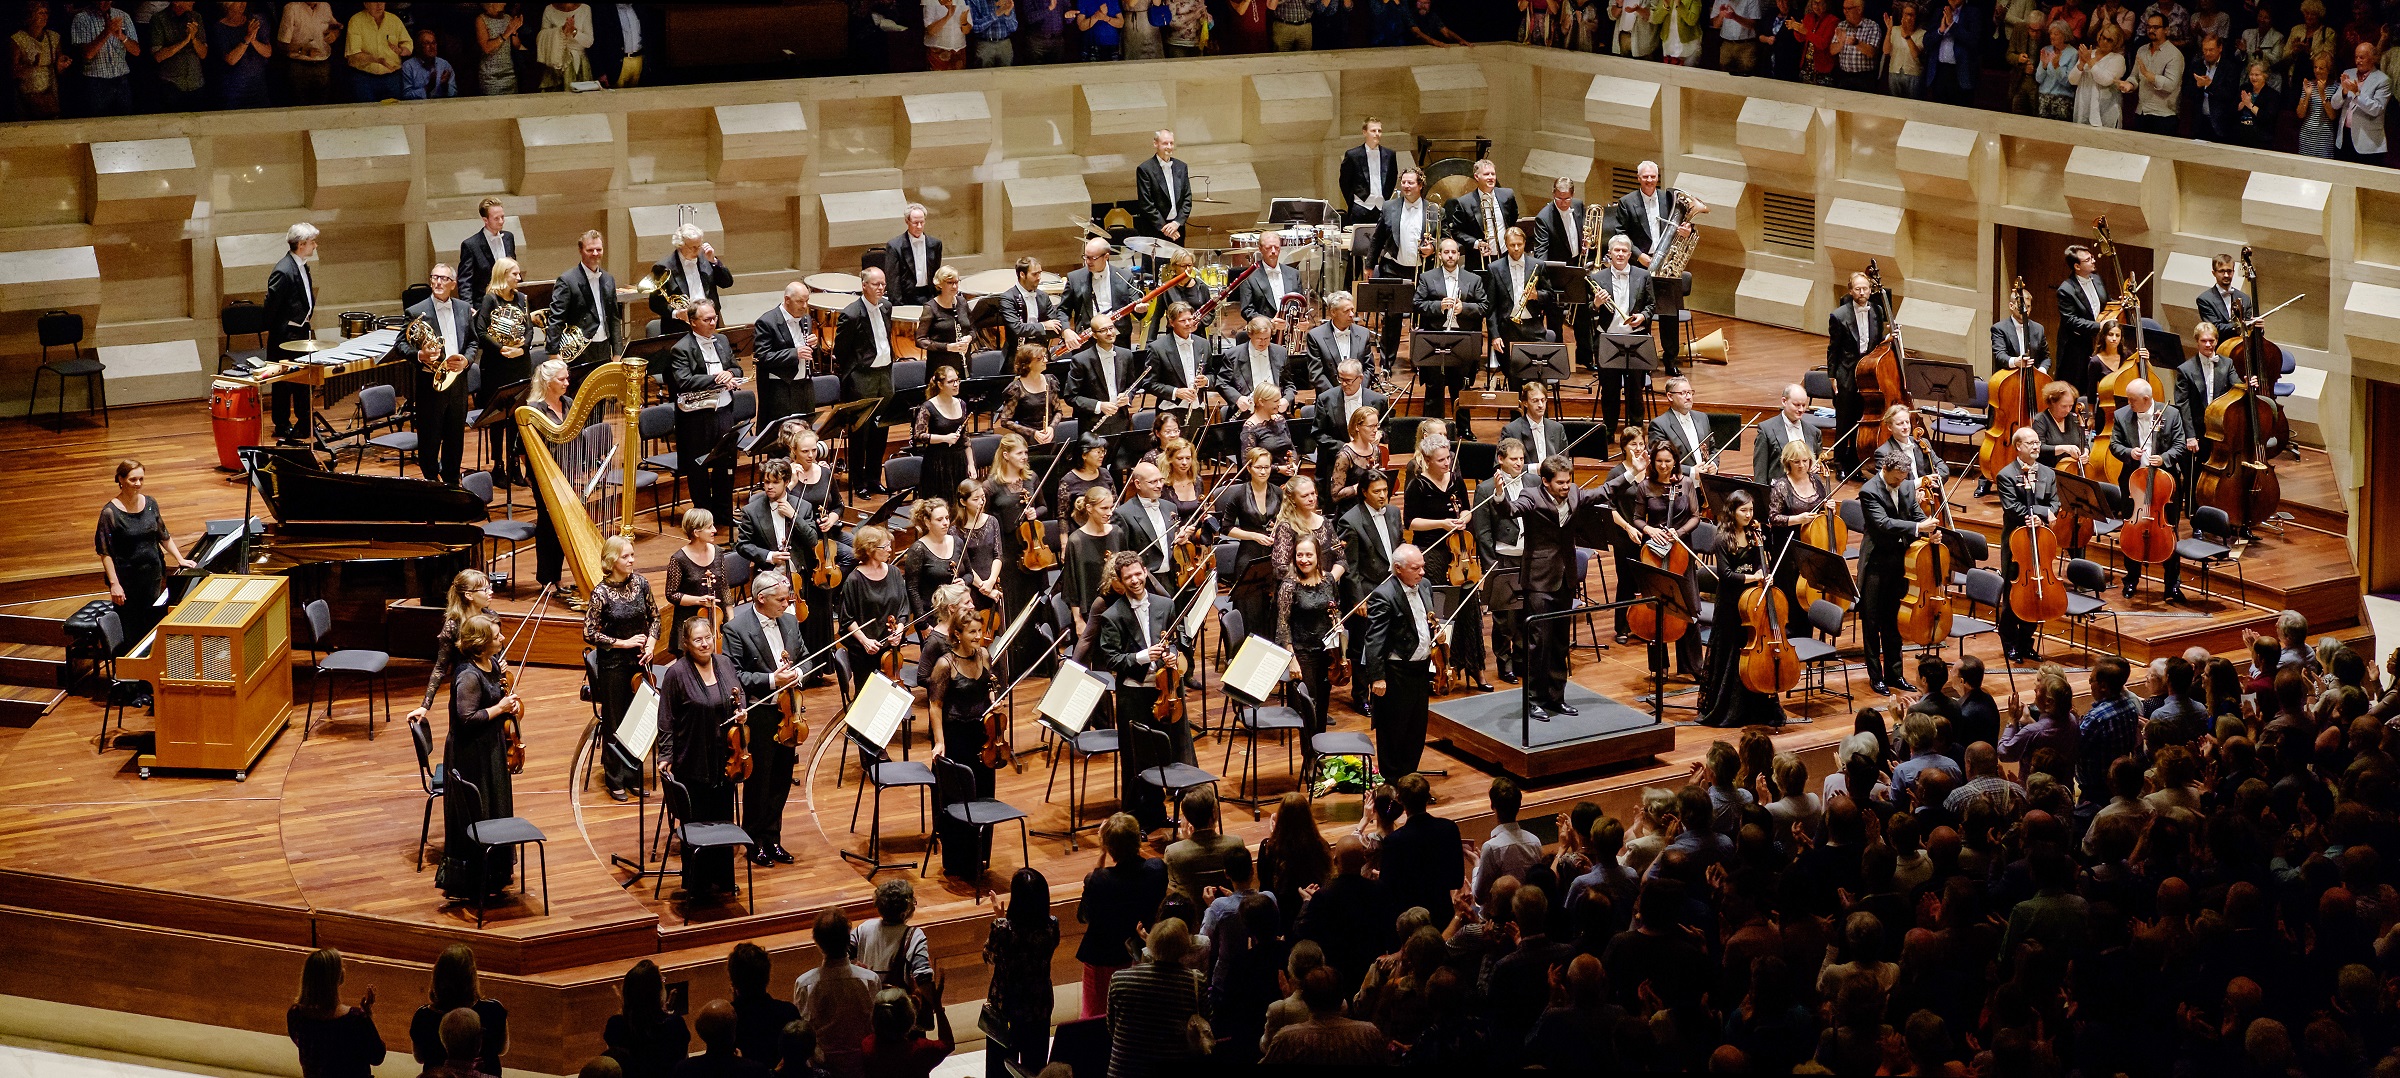 The Rotterdam Philharmonic Orchestra's centenary celebration